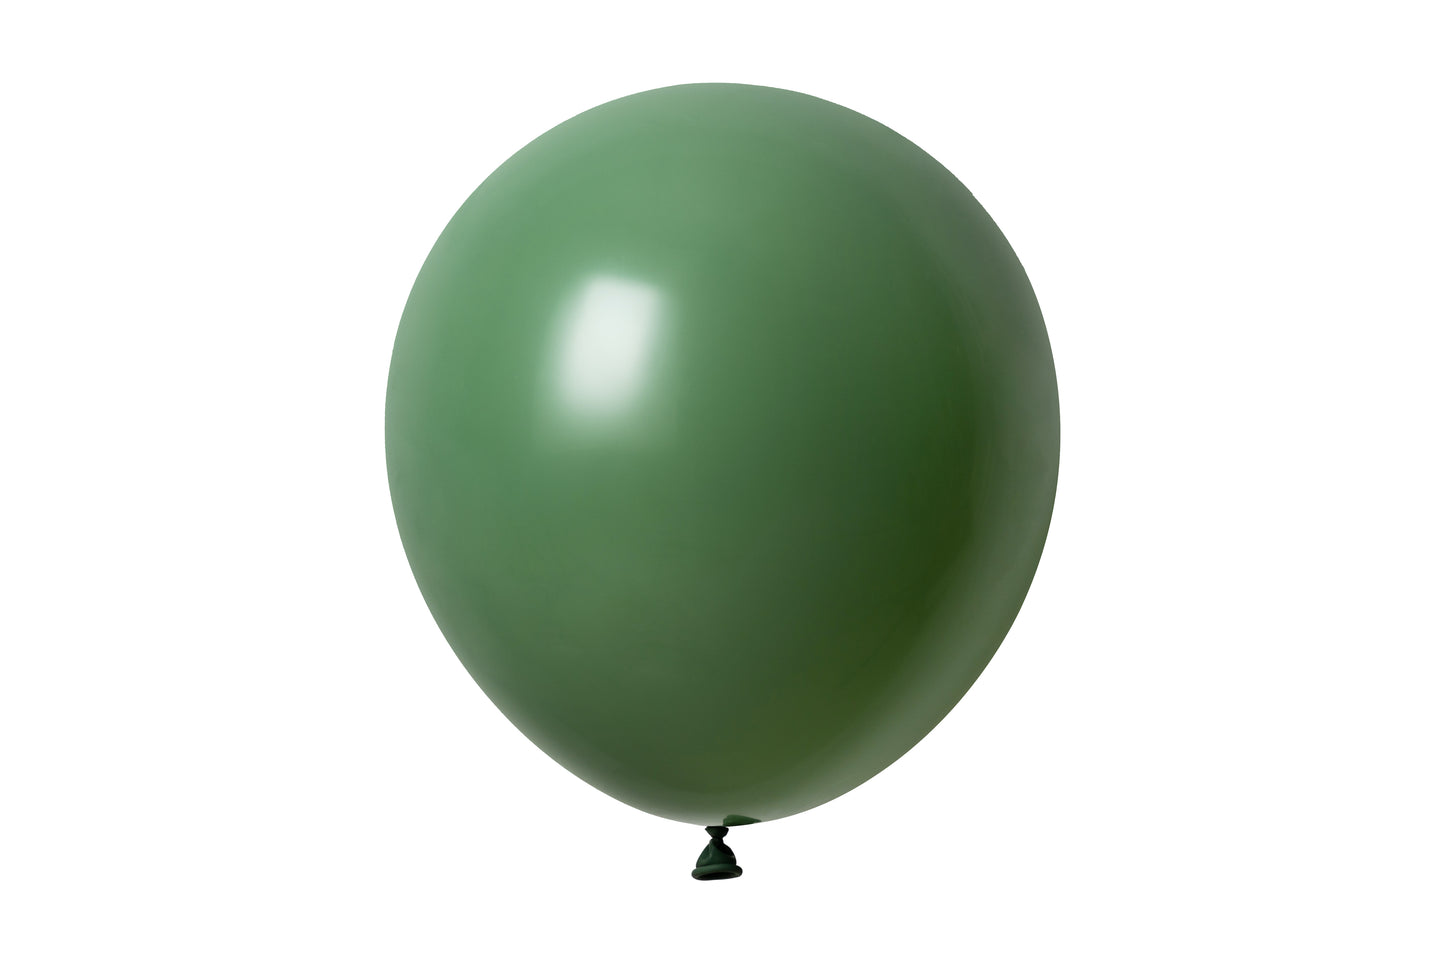 Winntex Premium 18" Avocado Green Latex Balloon 25ct